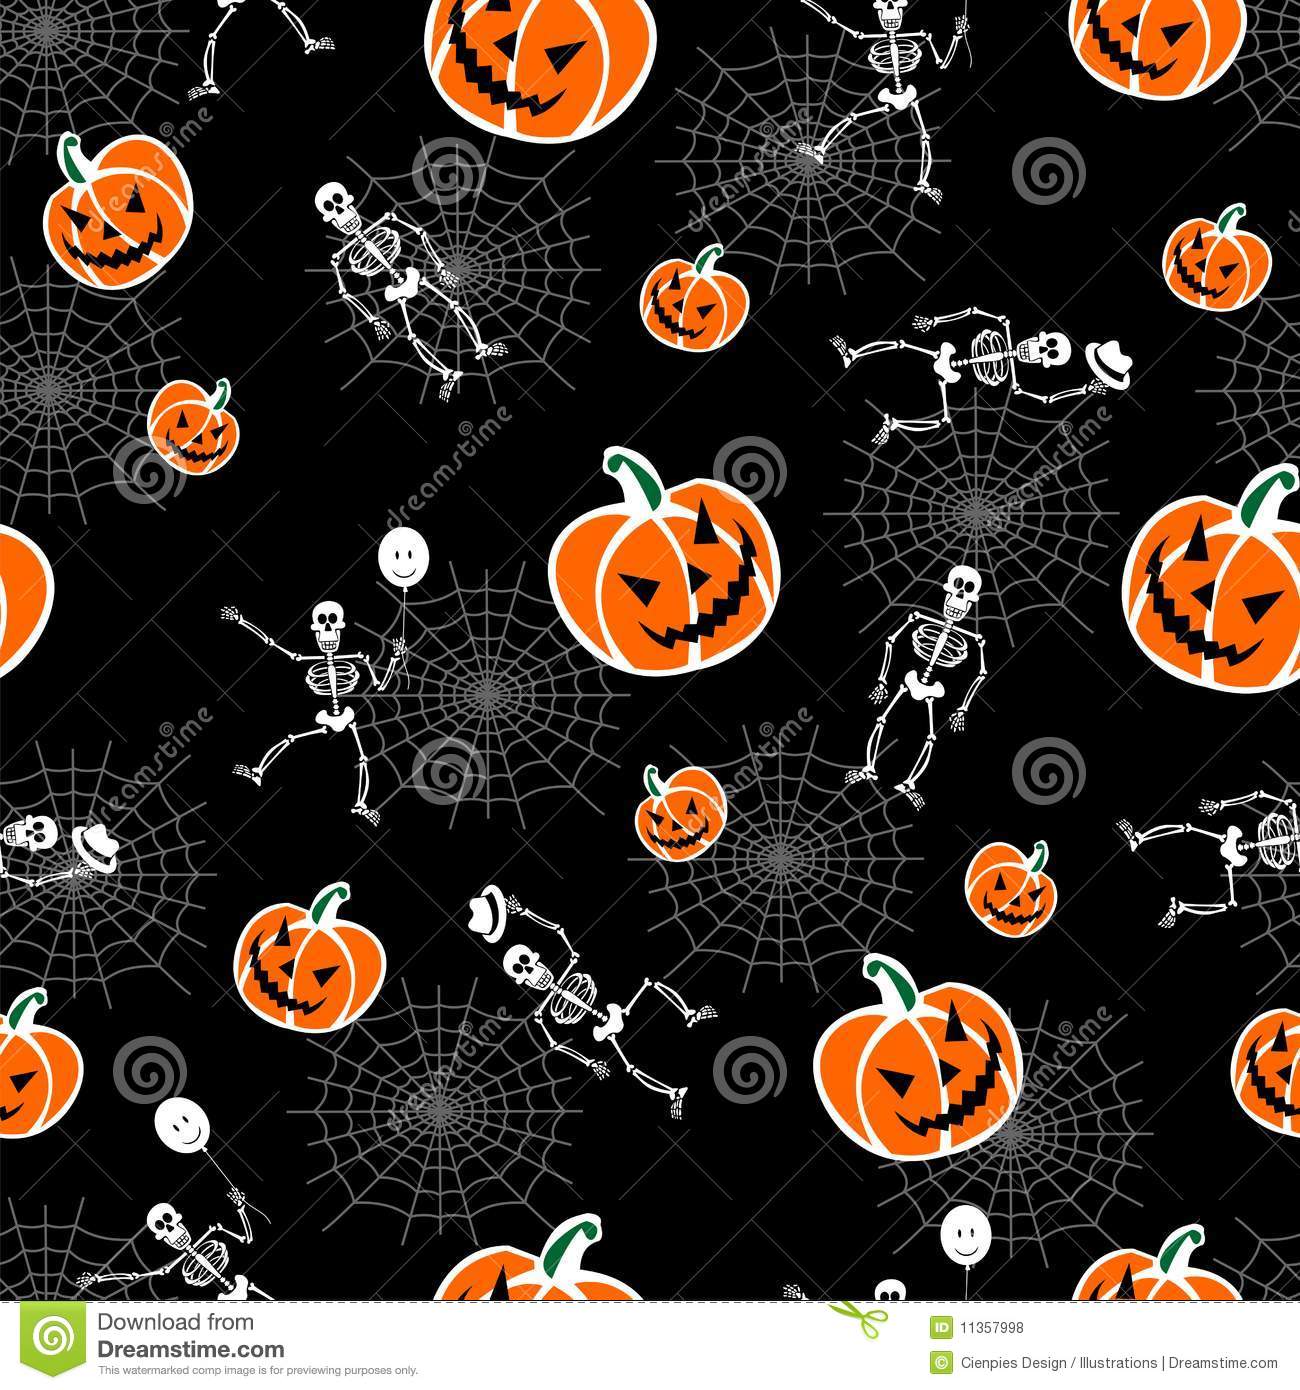 Free download halloween skeleton backgrounds images x for your desktop mobile tablet explore halloween skeleton wallpaper cool skeleton wallpapers skeleton wallpapers skeleton wallpaper